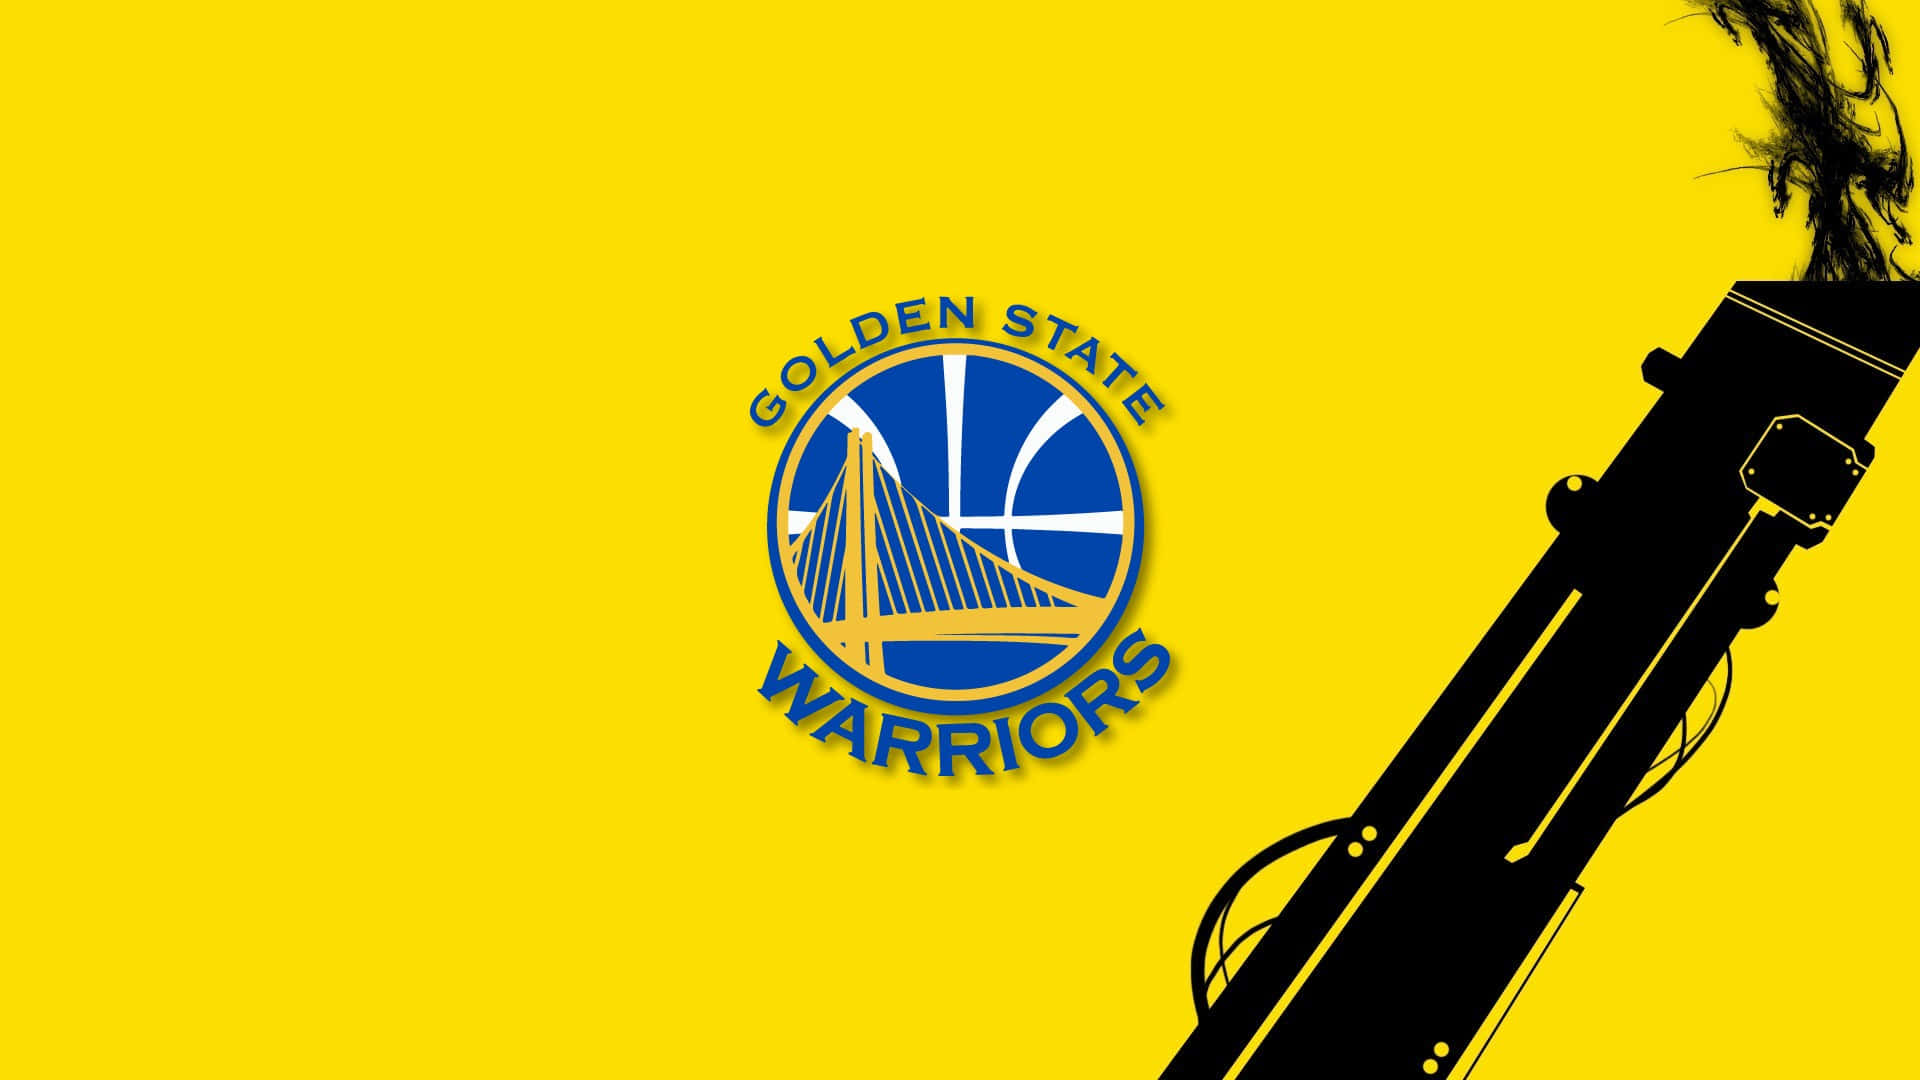 Logotypenför Golden State Warriors Basketlaget. Wallpaper